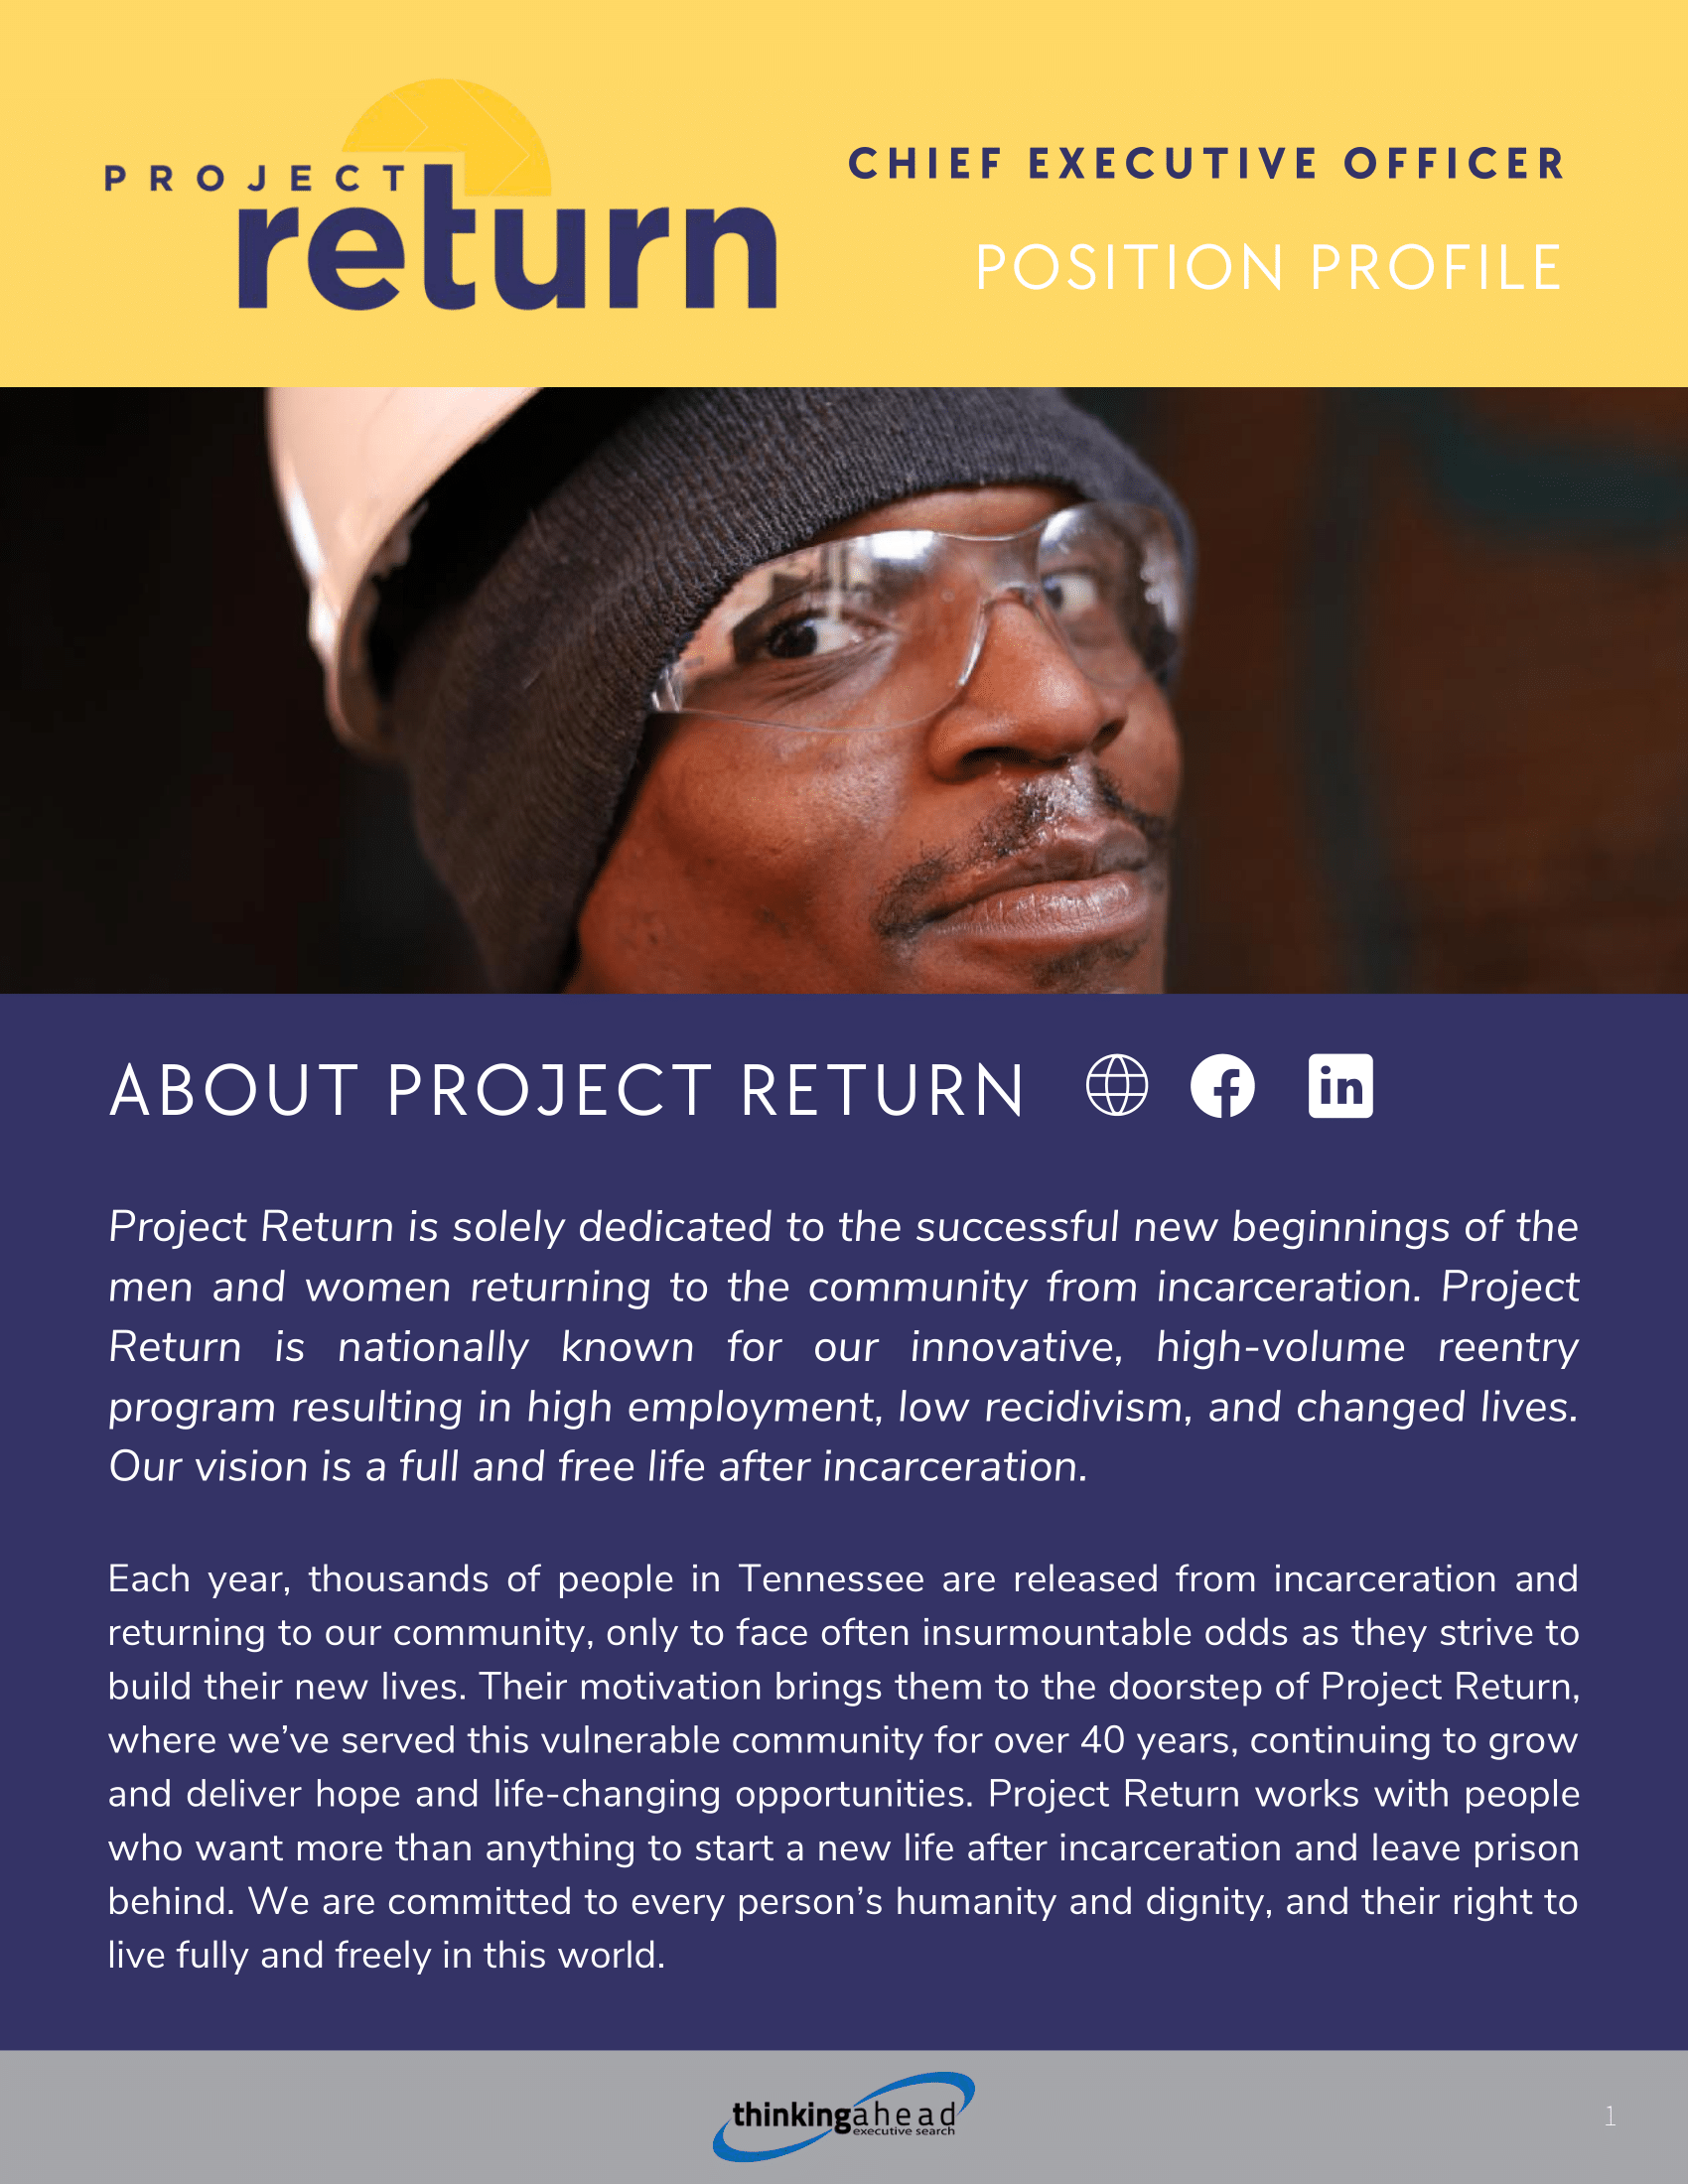 project return CEO position announcement about